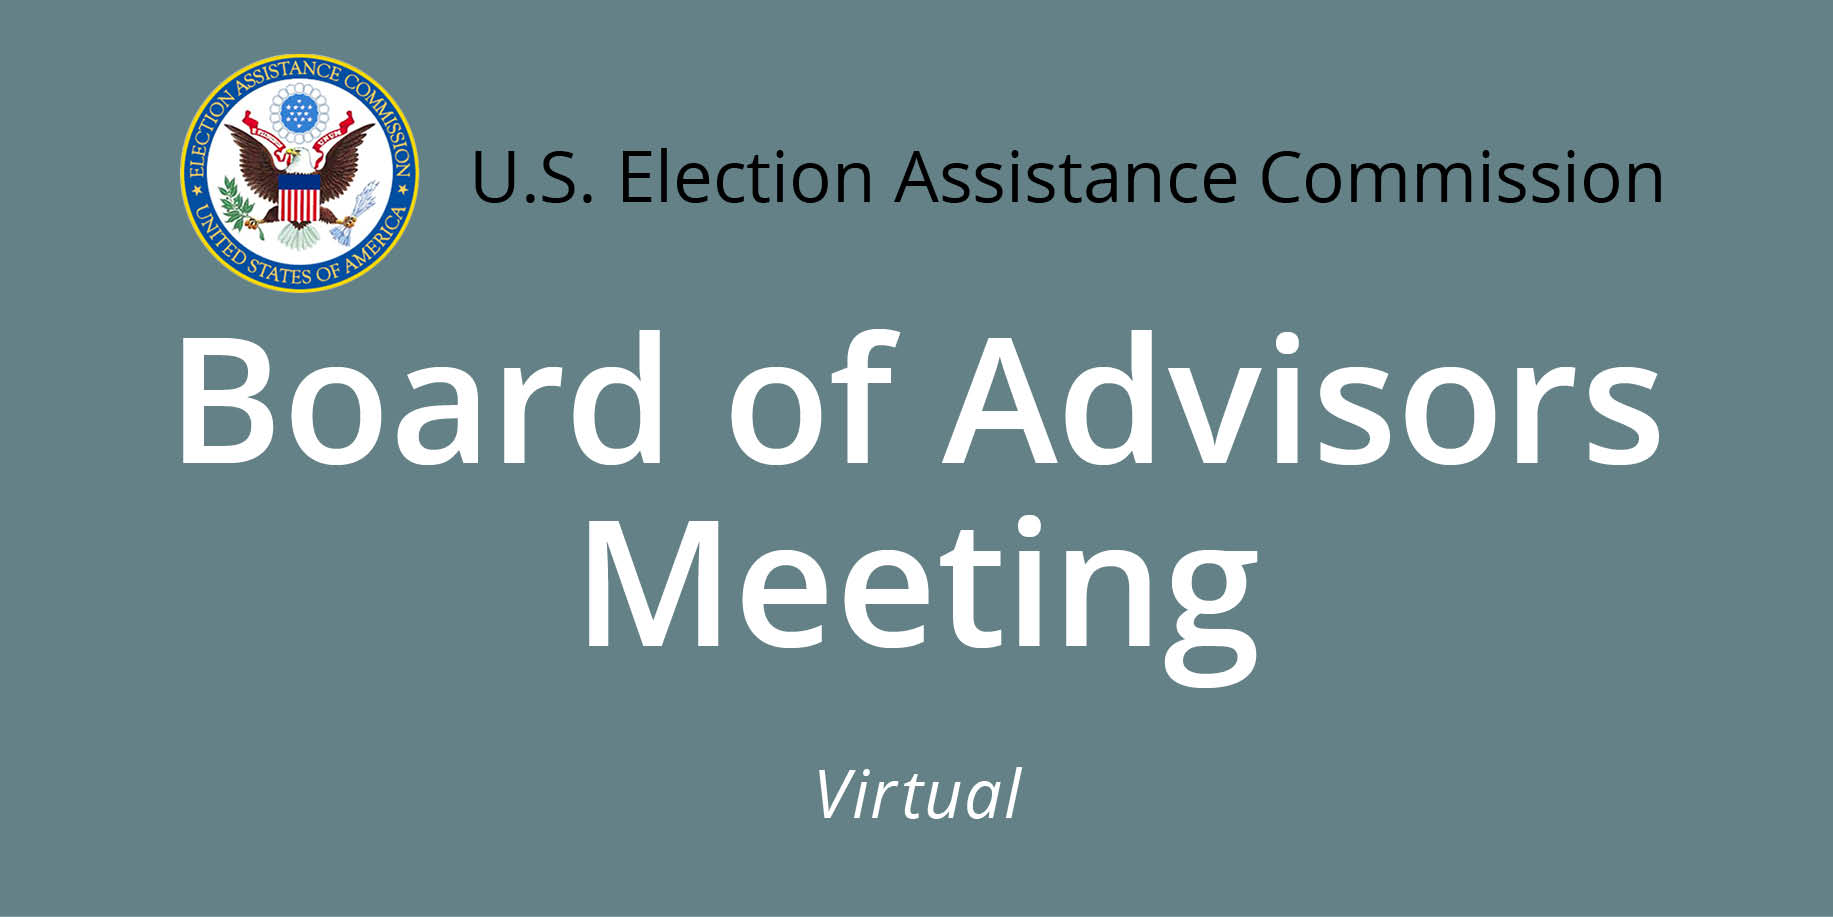 virtual EAC Board of Advisors Meeting